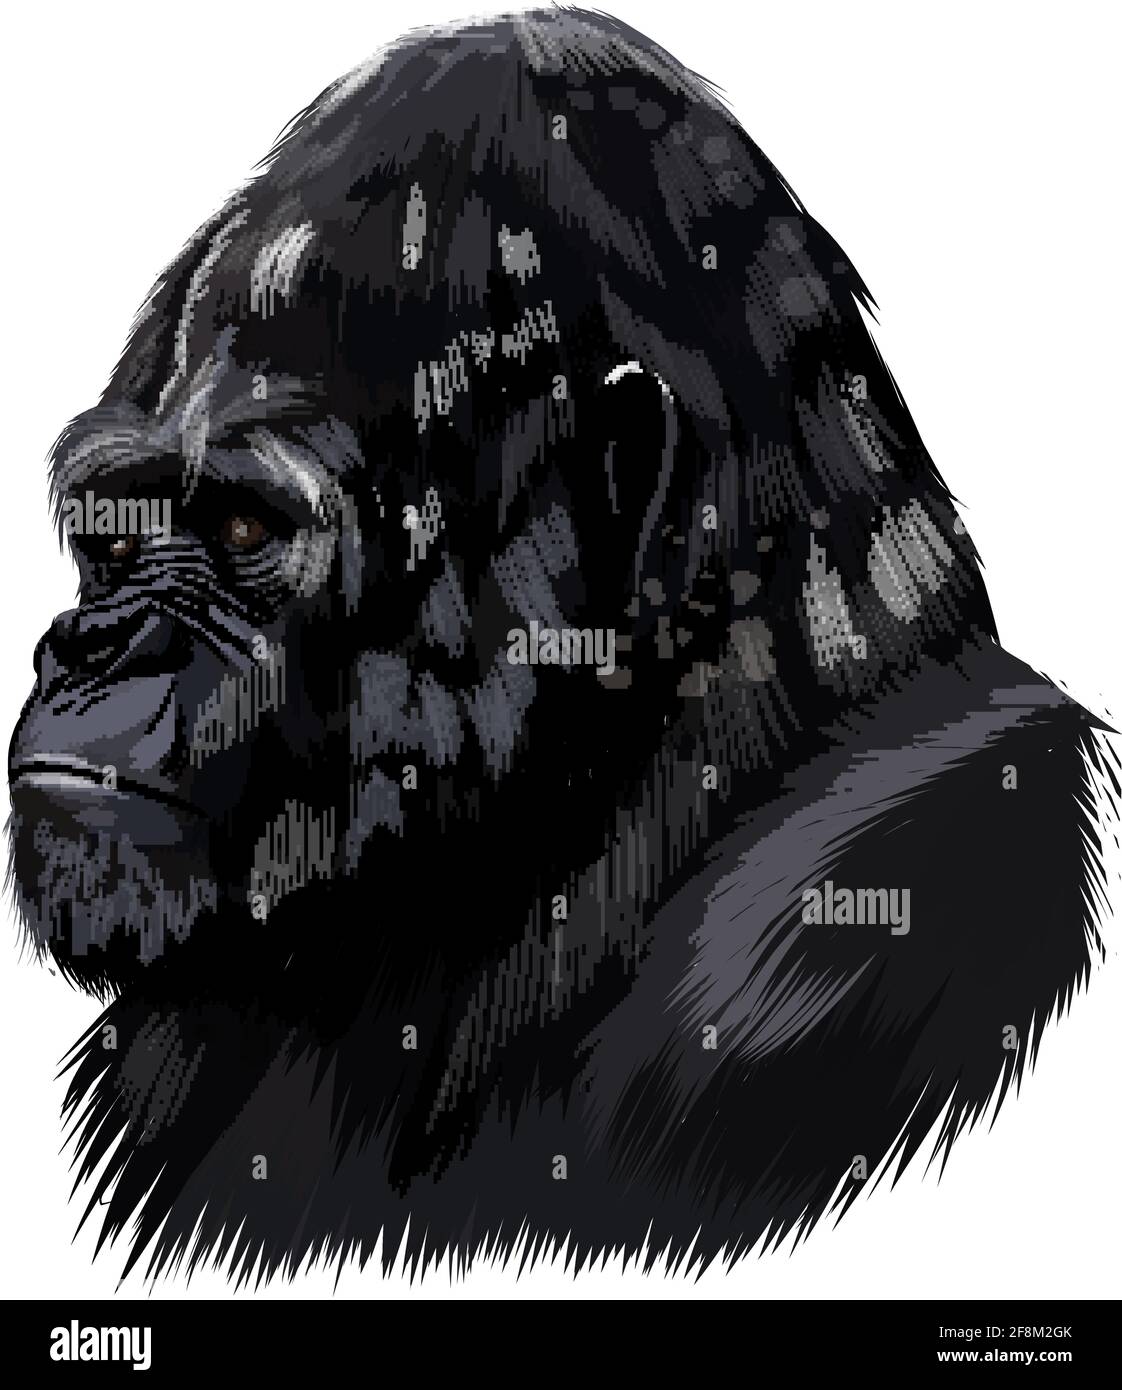 realistic gorilla drawing